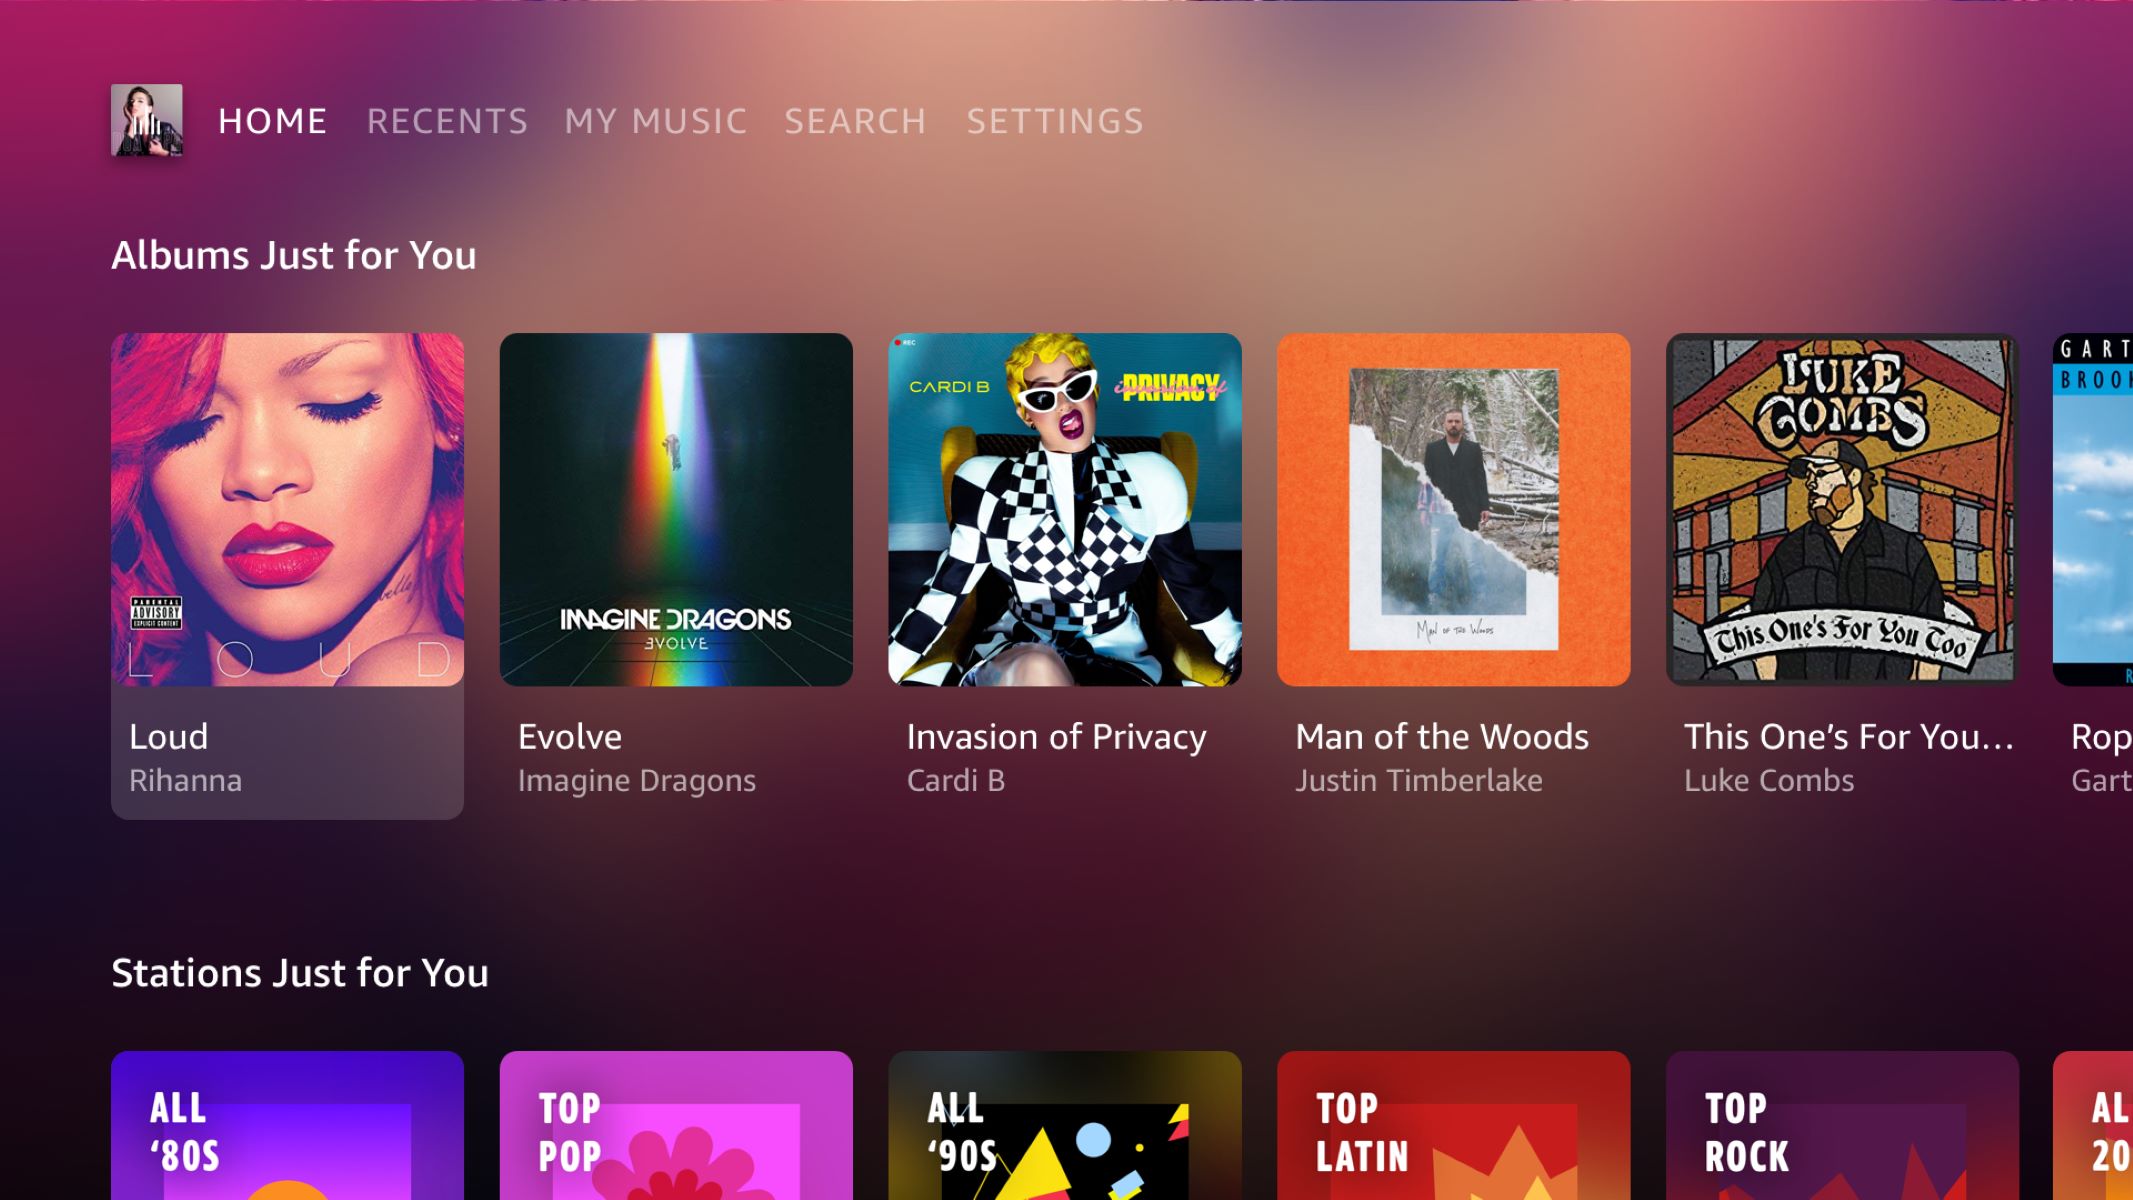 How Do I Get The Amazon Music App?